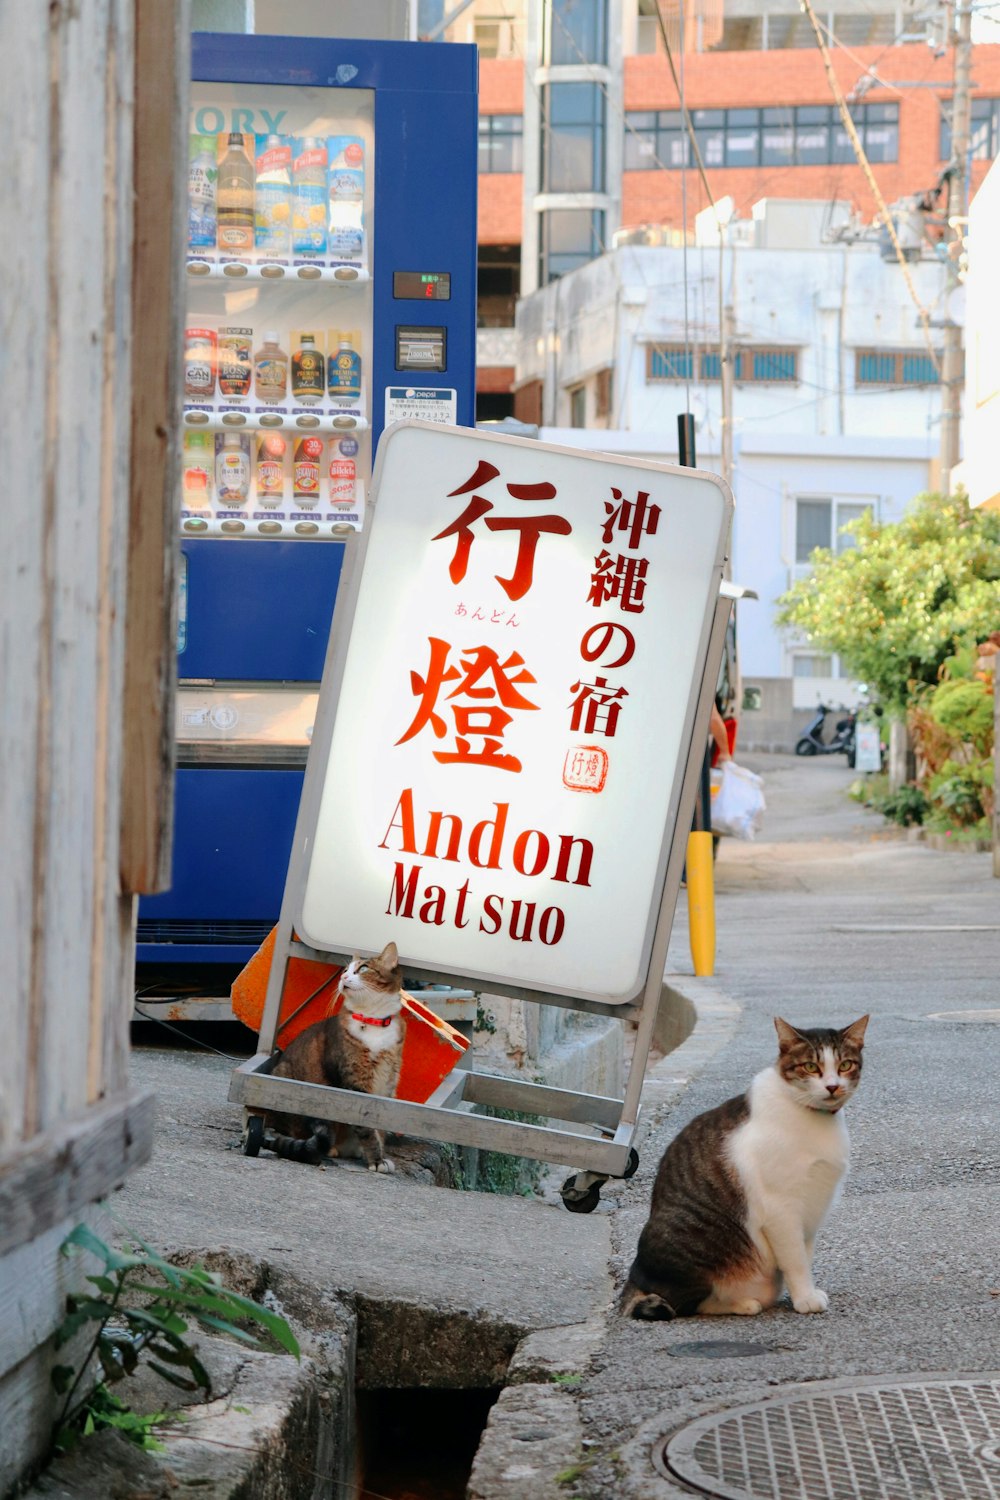 gato sentado cerca de la señalización en kanji